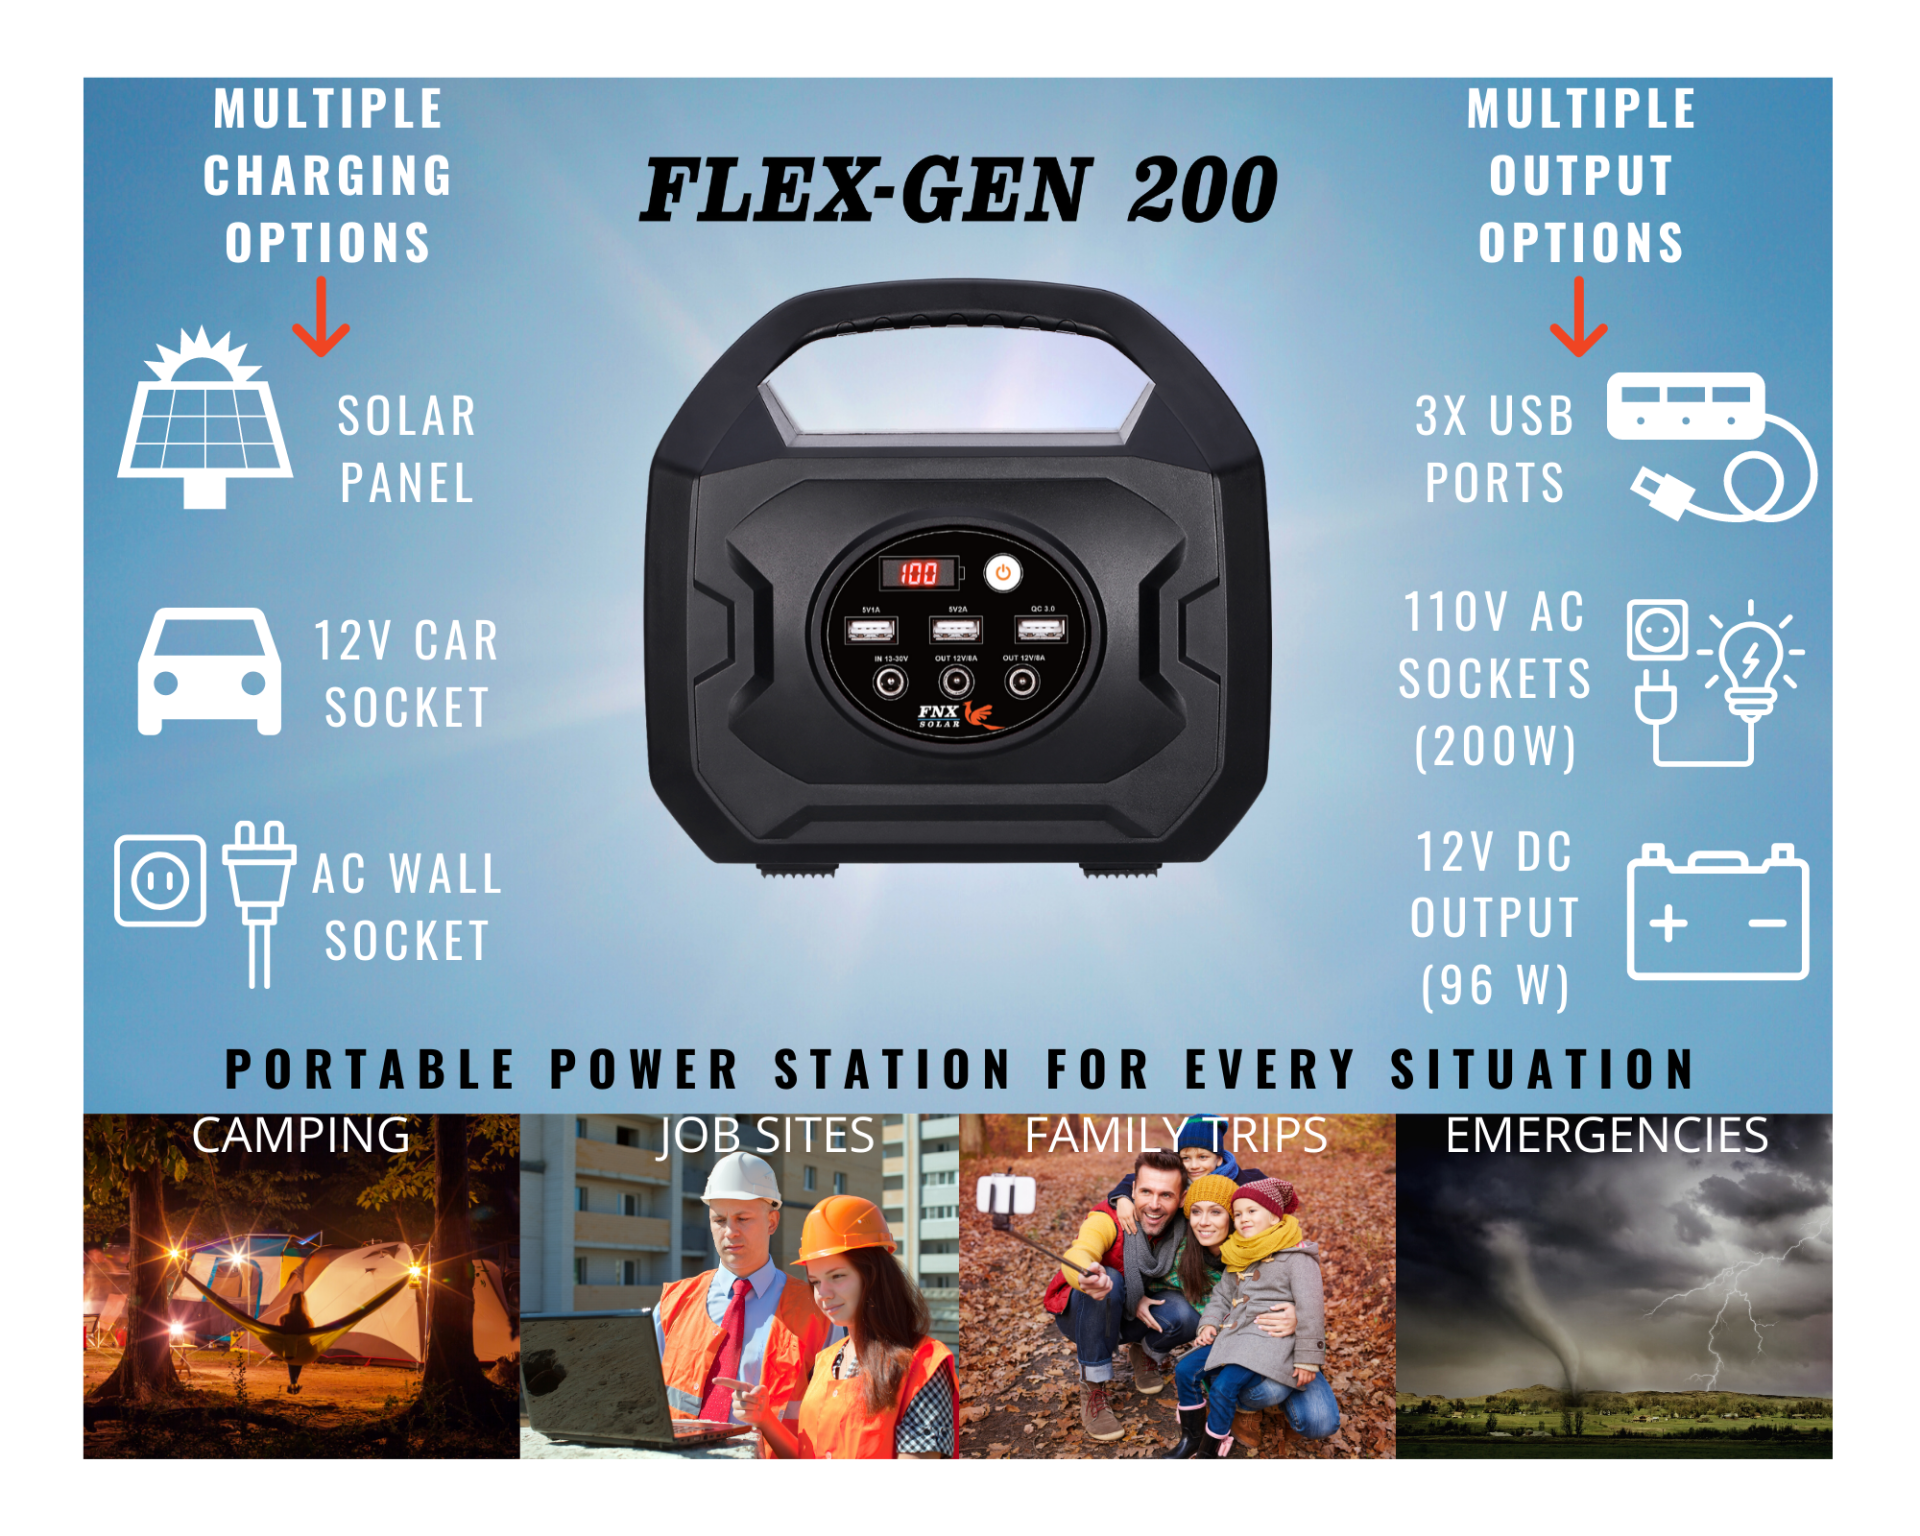 FLEX-GEN portable power station by FNX Solar